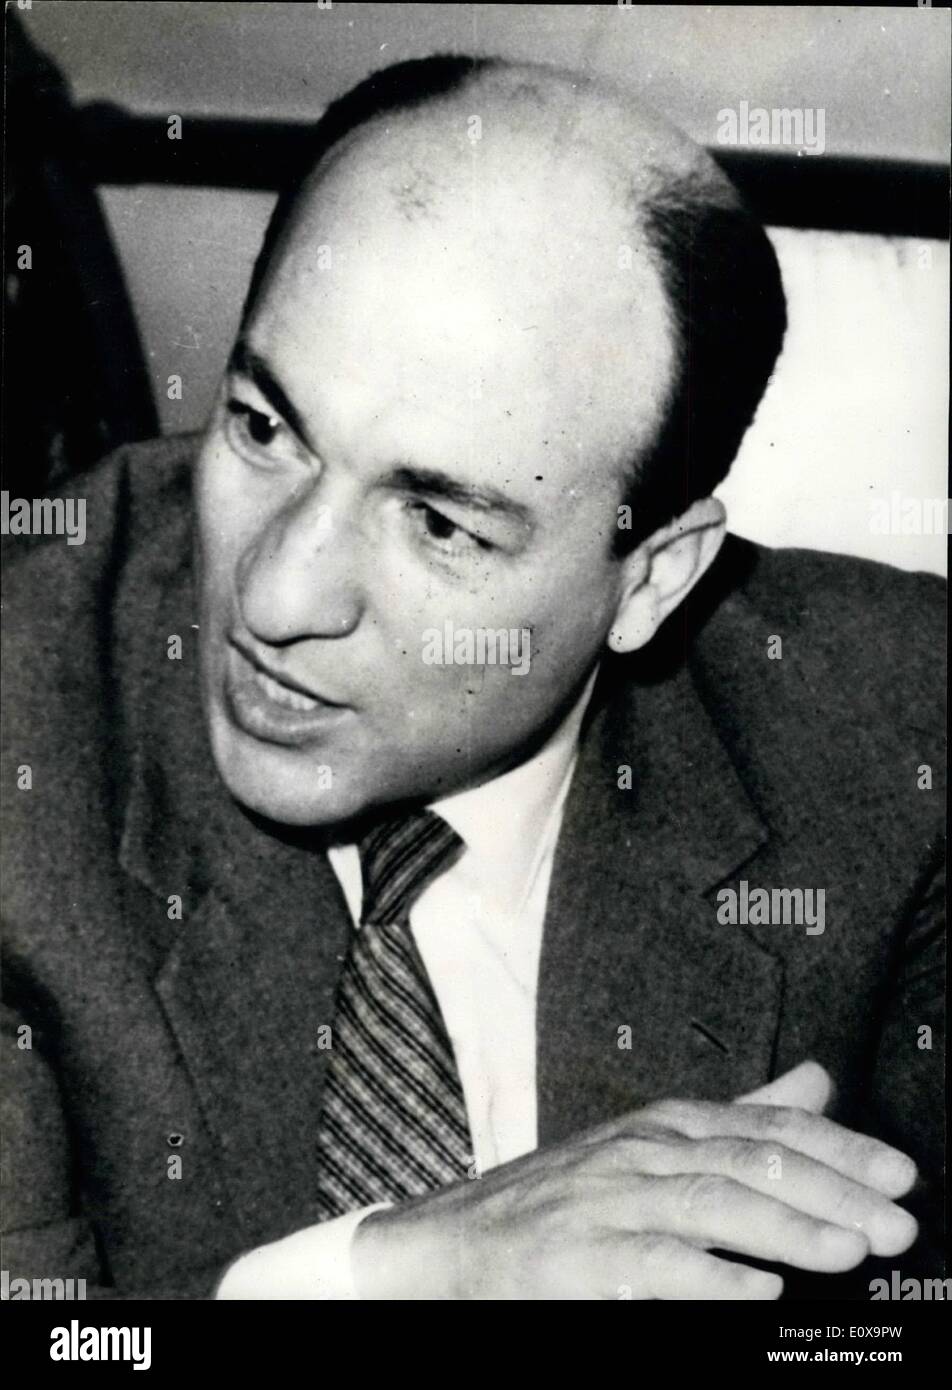 Oct. 10, 1965 - The United Arab Republic's New Prime Minister Photo Shows - Zakaria Mohieddin the New United Arab Republic's Prime Minister, and Minister of the Interior Stock Photo